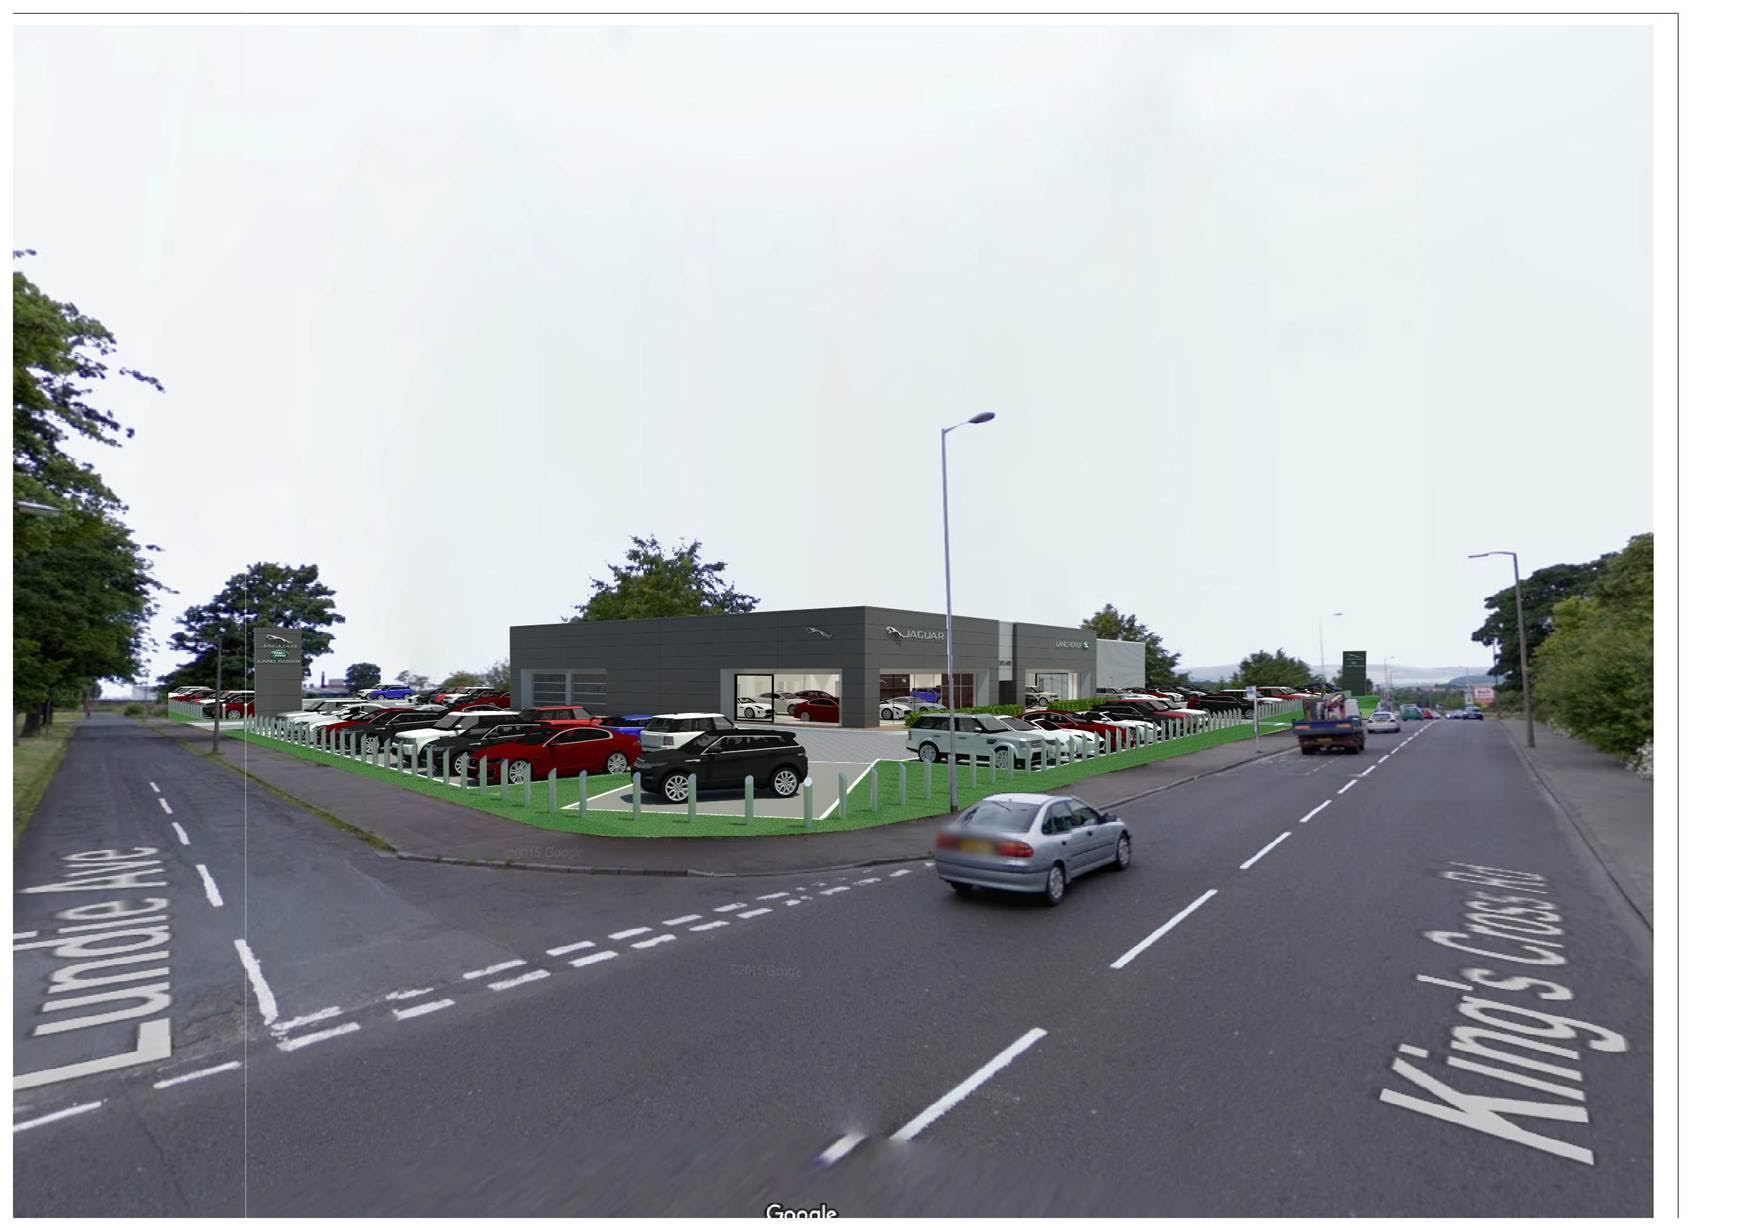 John Clark Motor Group's proposed £10 million showroom development on Kings Cross Road.